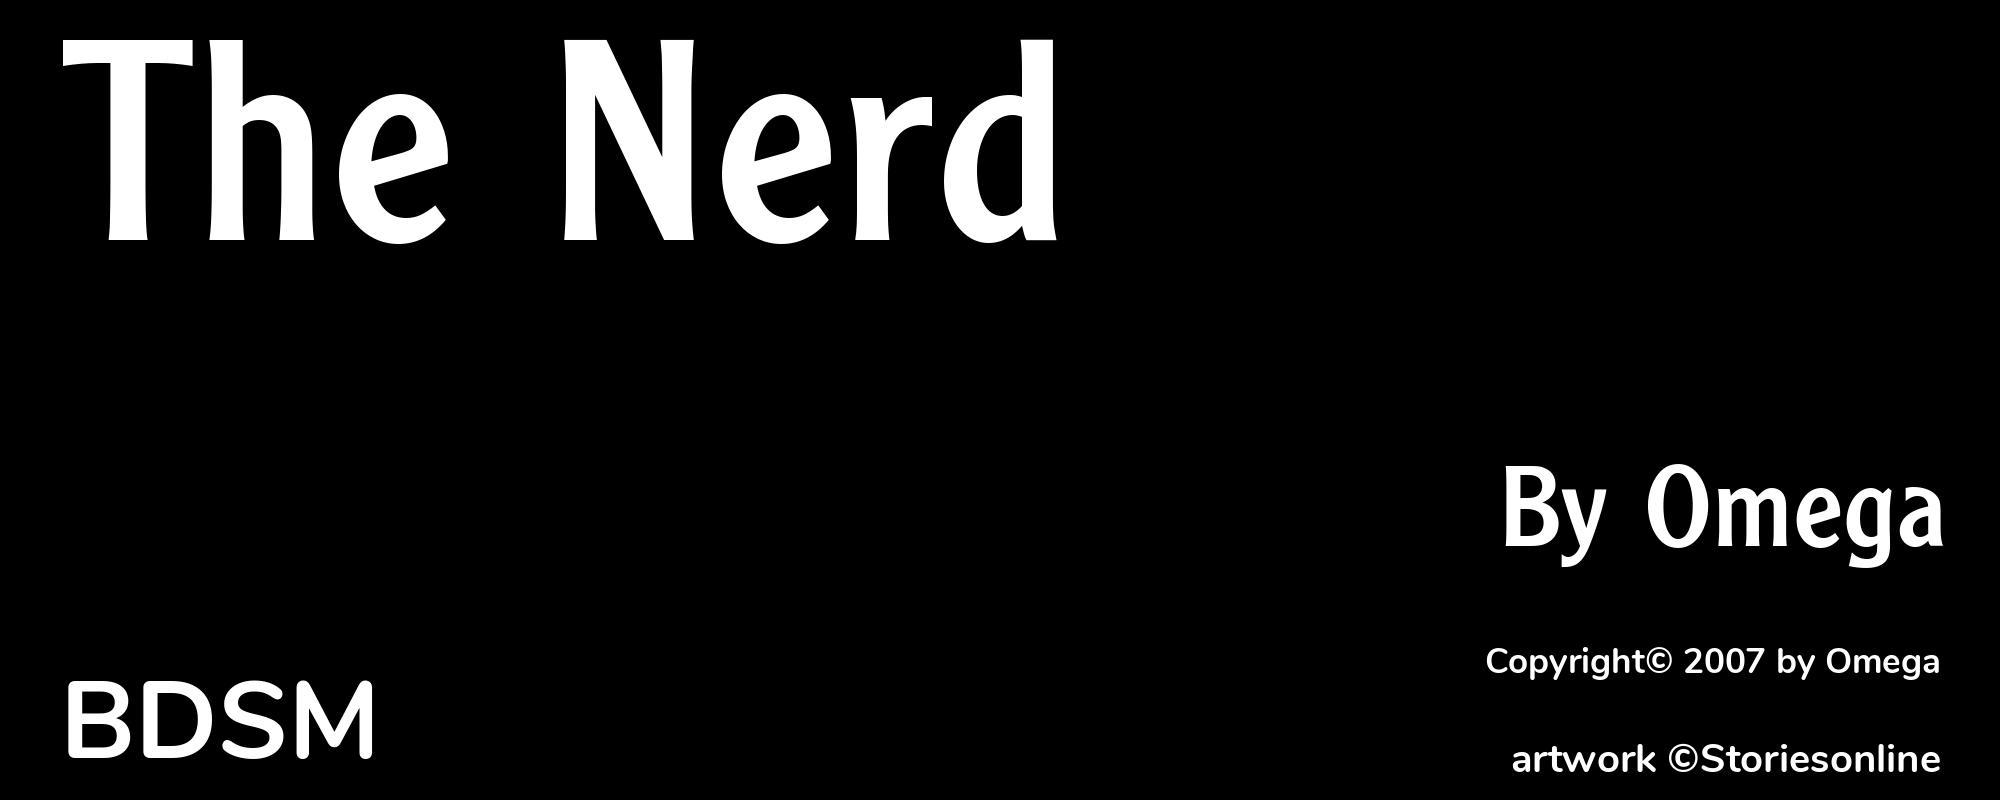 The Nerd - Cover